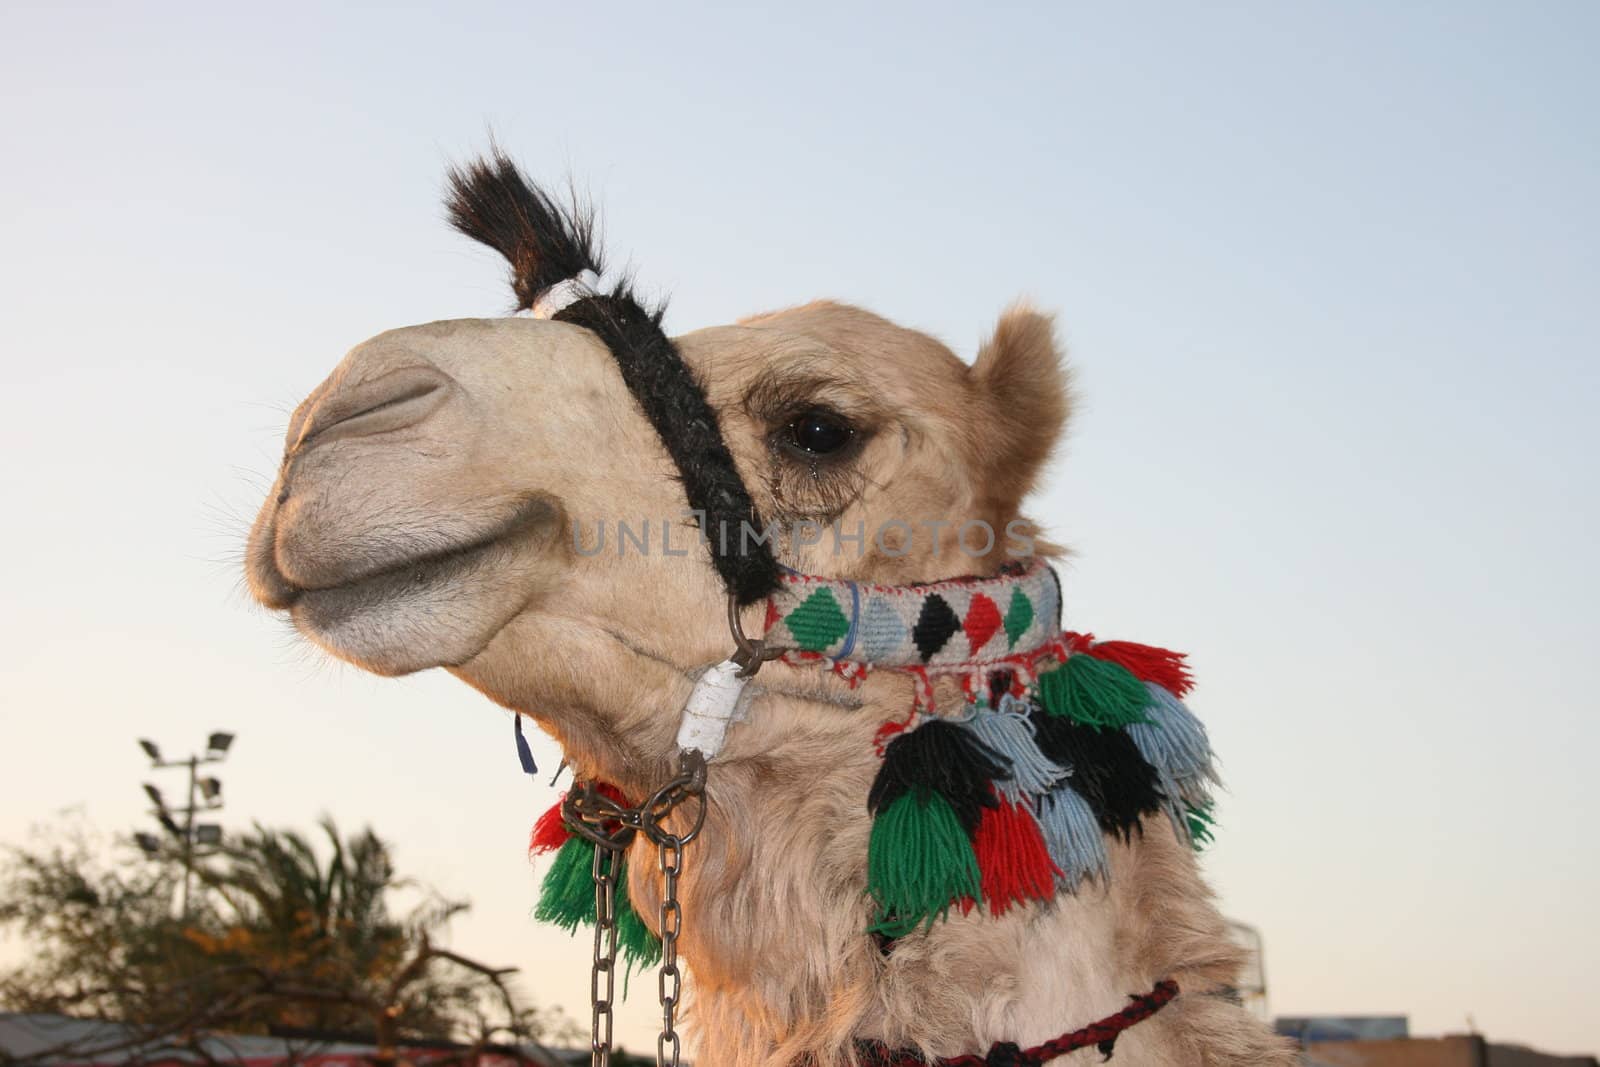 A camel photographed in Aqaba, Jordan.